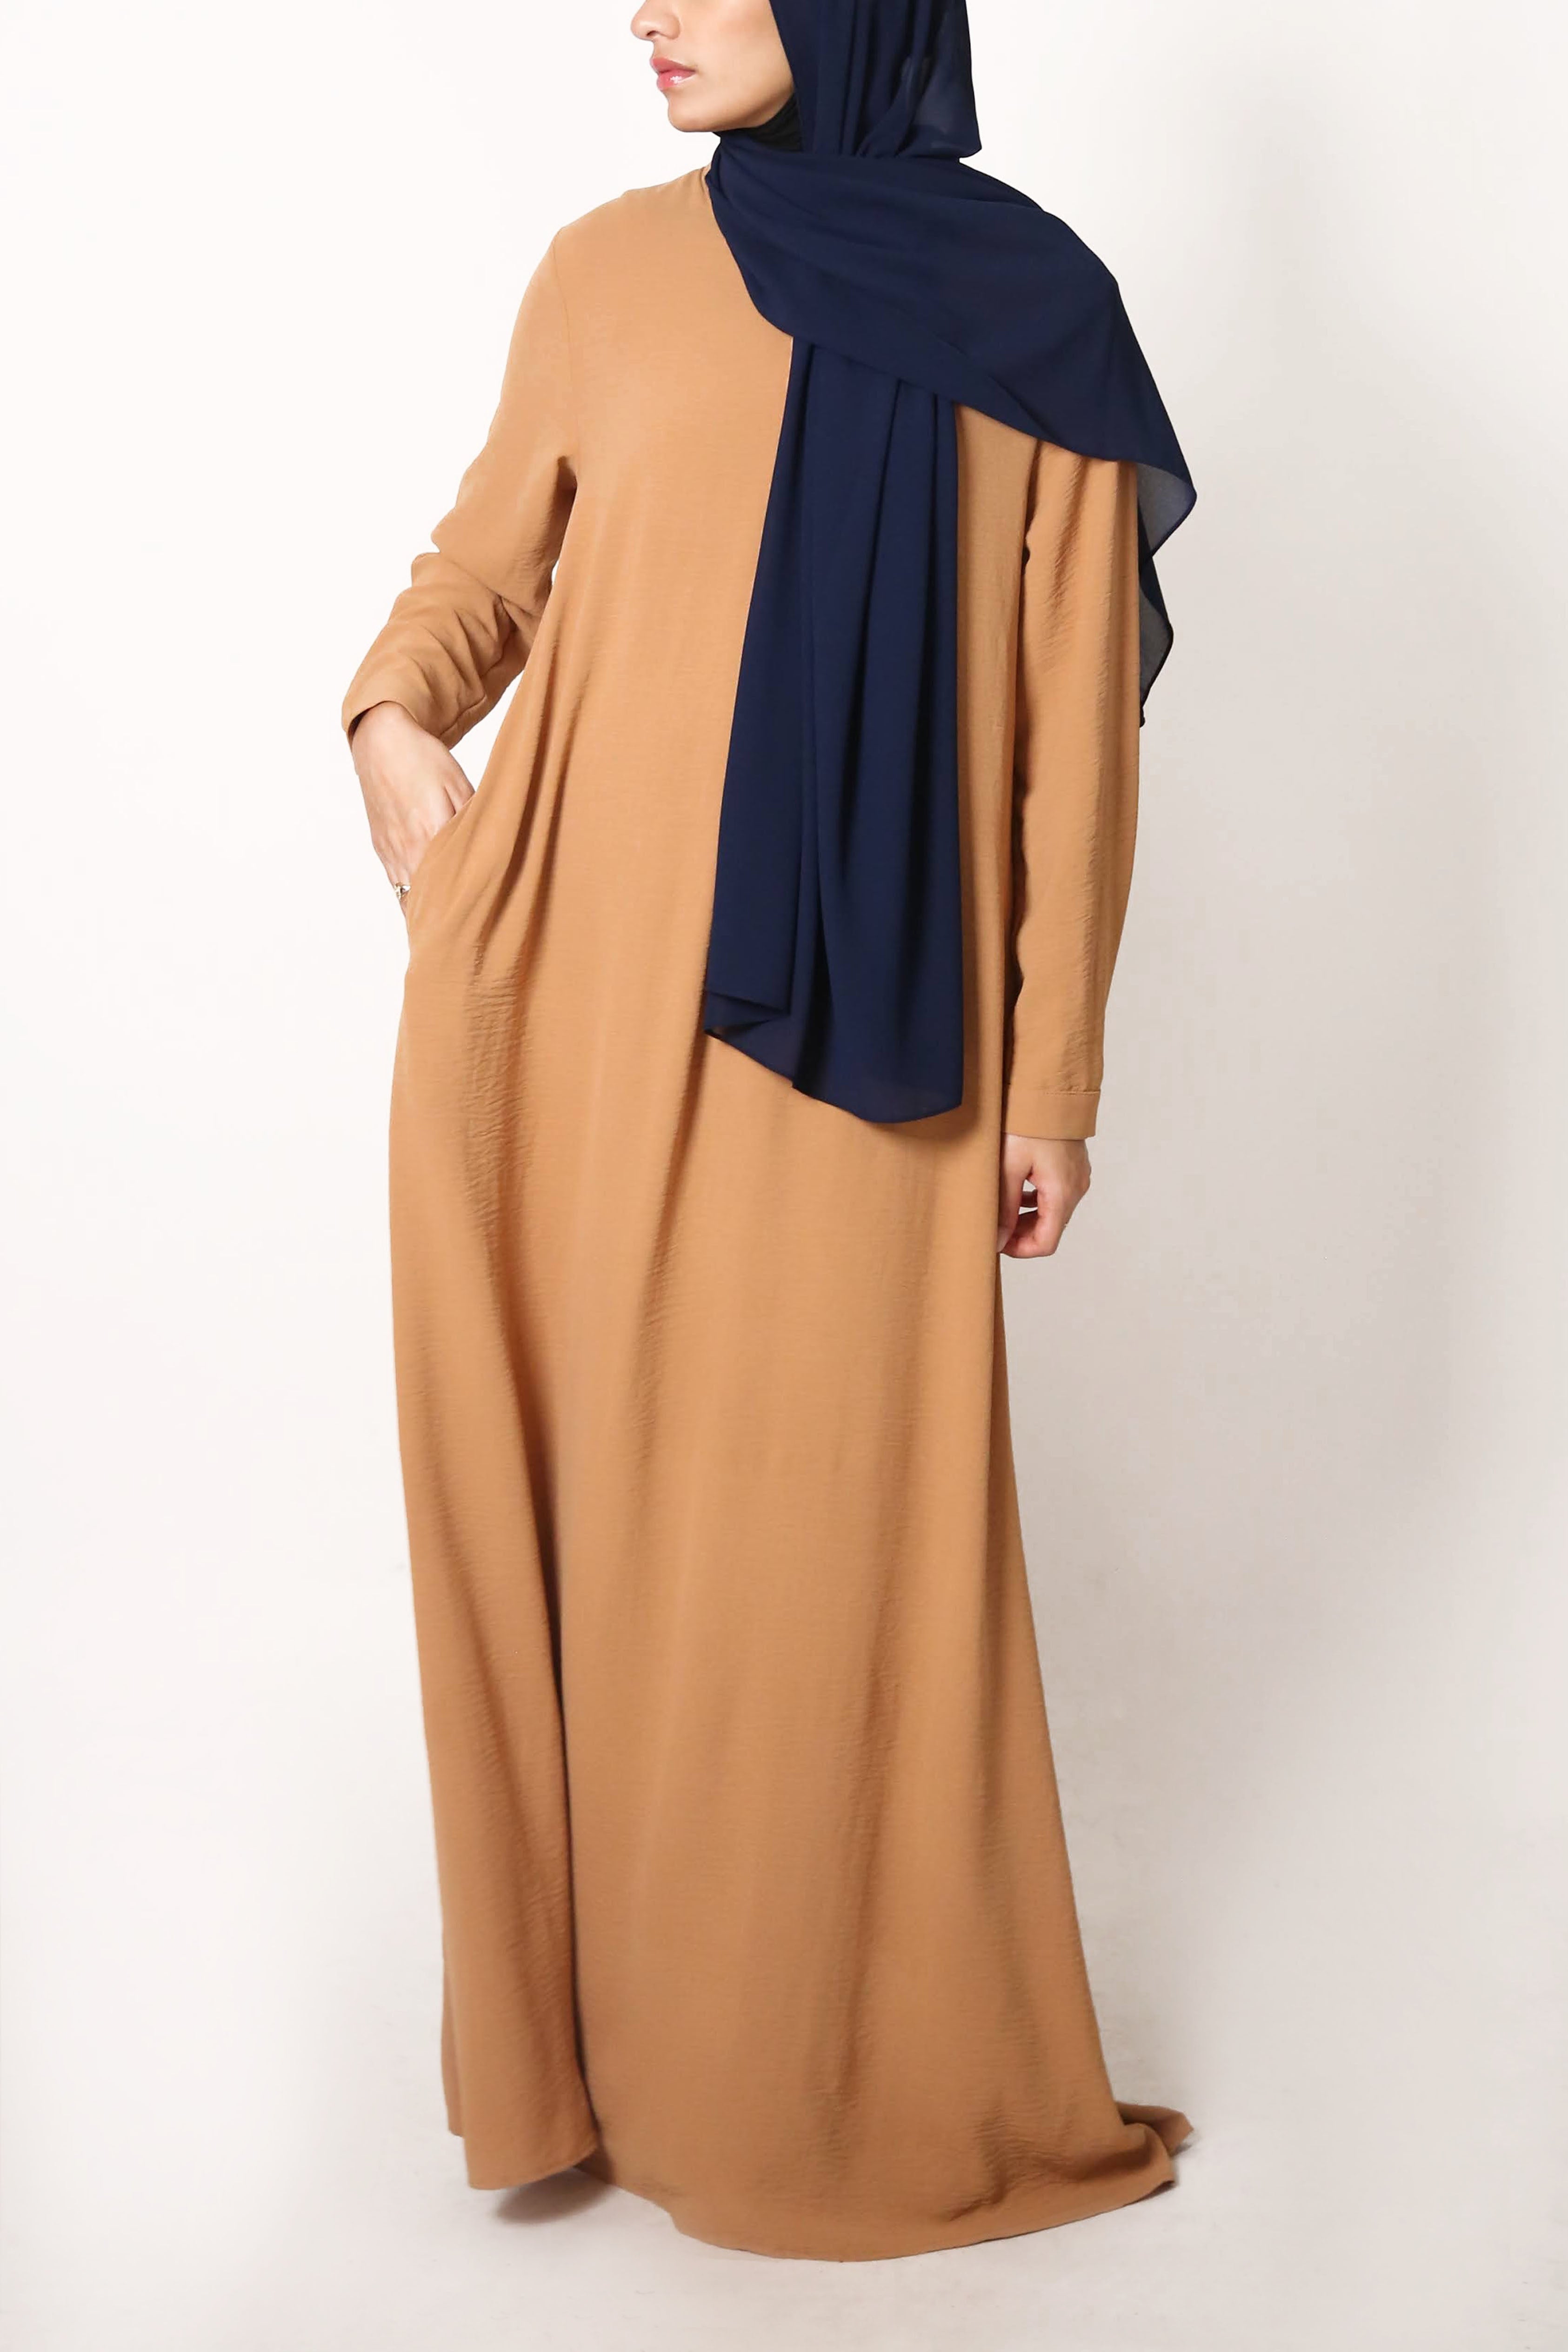 Camel Tan Button Front Crinkle Abaya